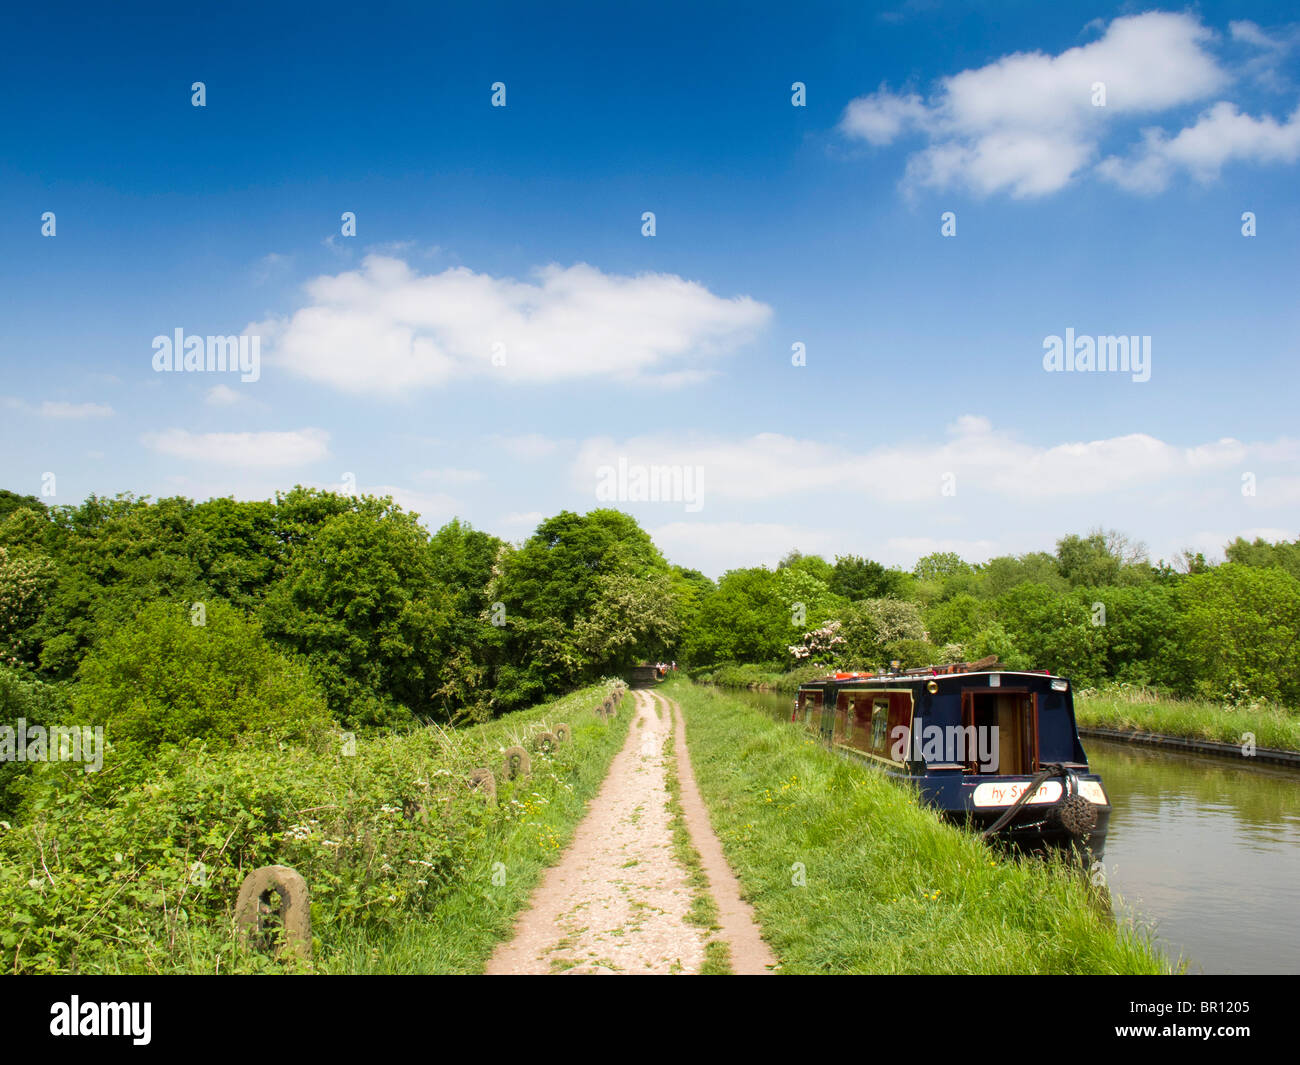 UK, England, Cheshire, Congleton, Dane in Shaw, narrowboats on Macclesfield canal Stock Photo